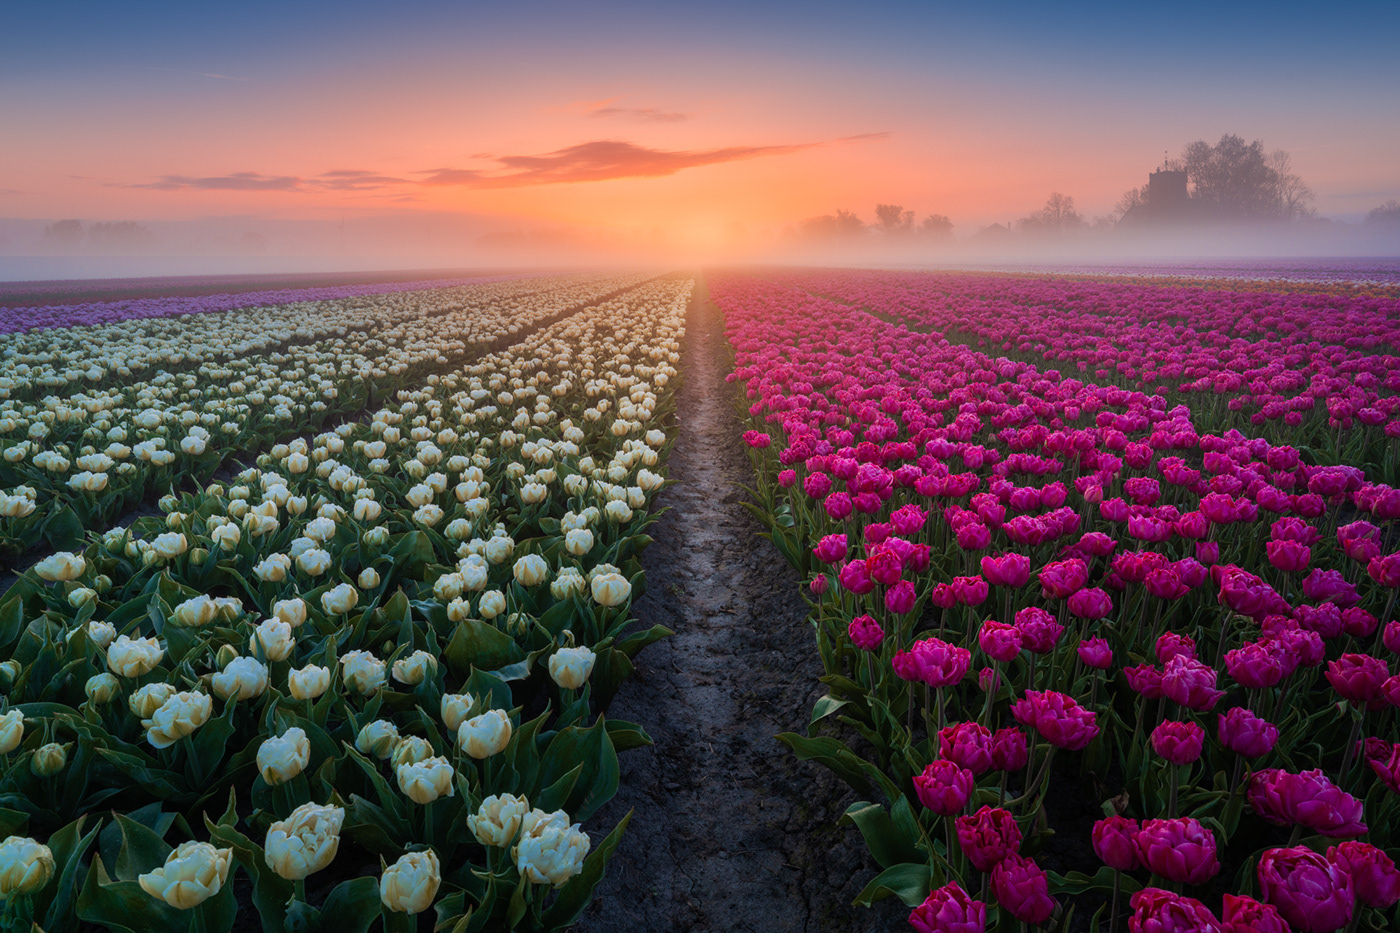 dutch Flowers The Netherlands tulips tulipseason